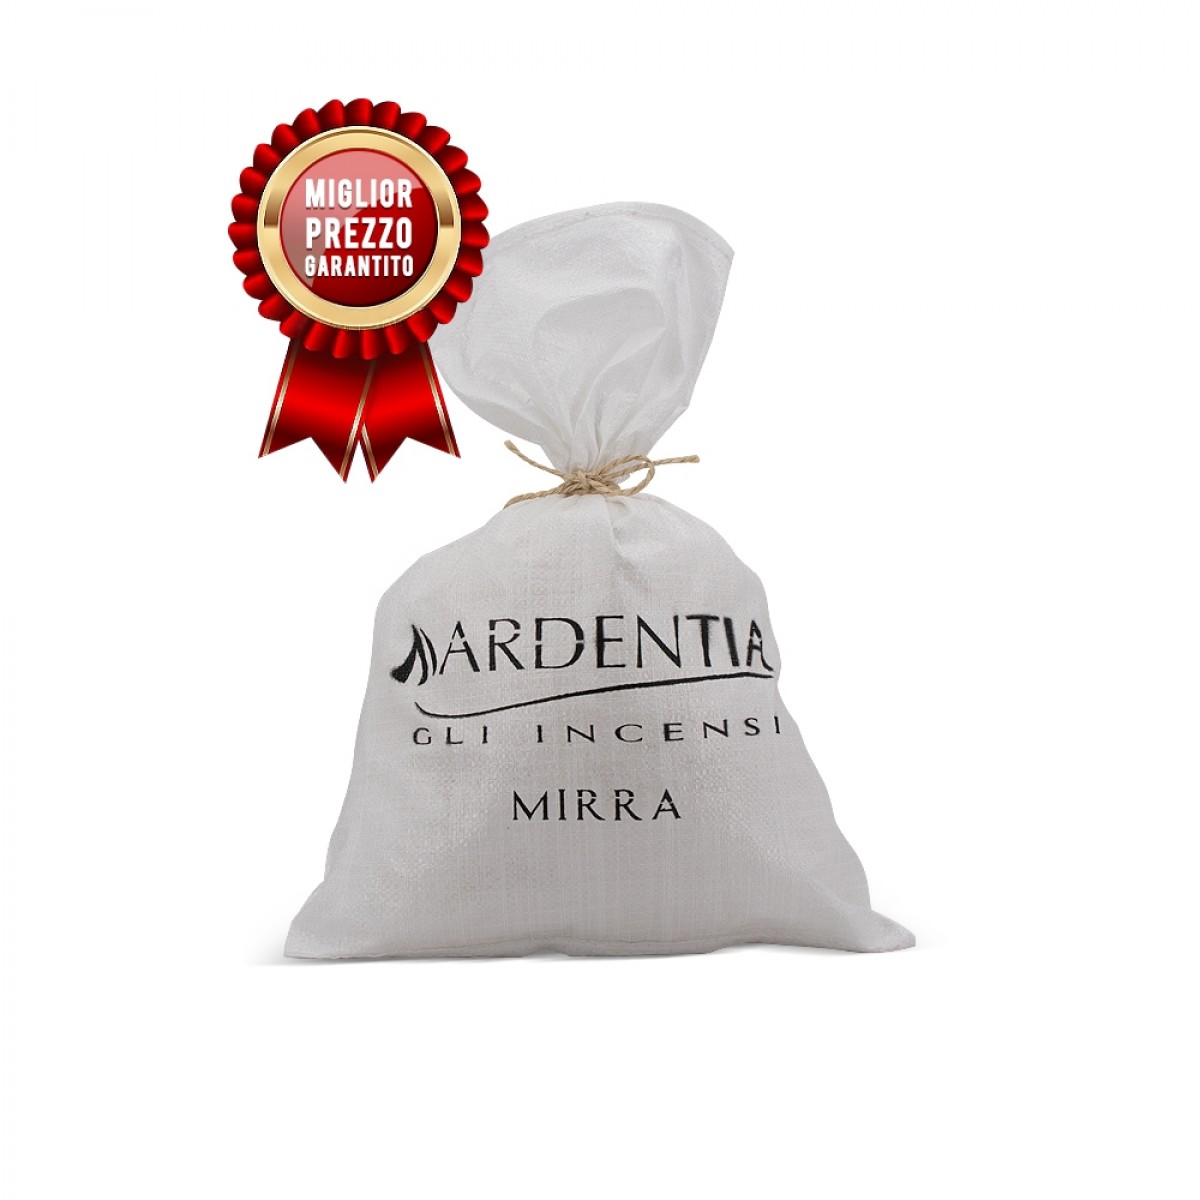 MIRRA Ardentia - Sacco da 5 kilogrammi